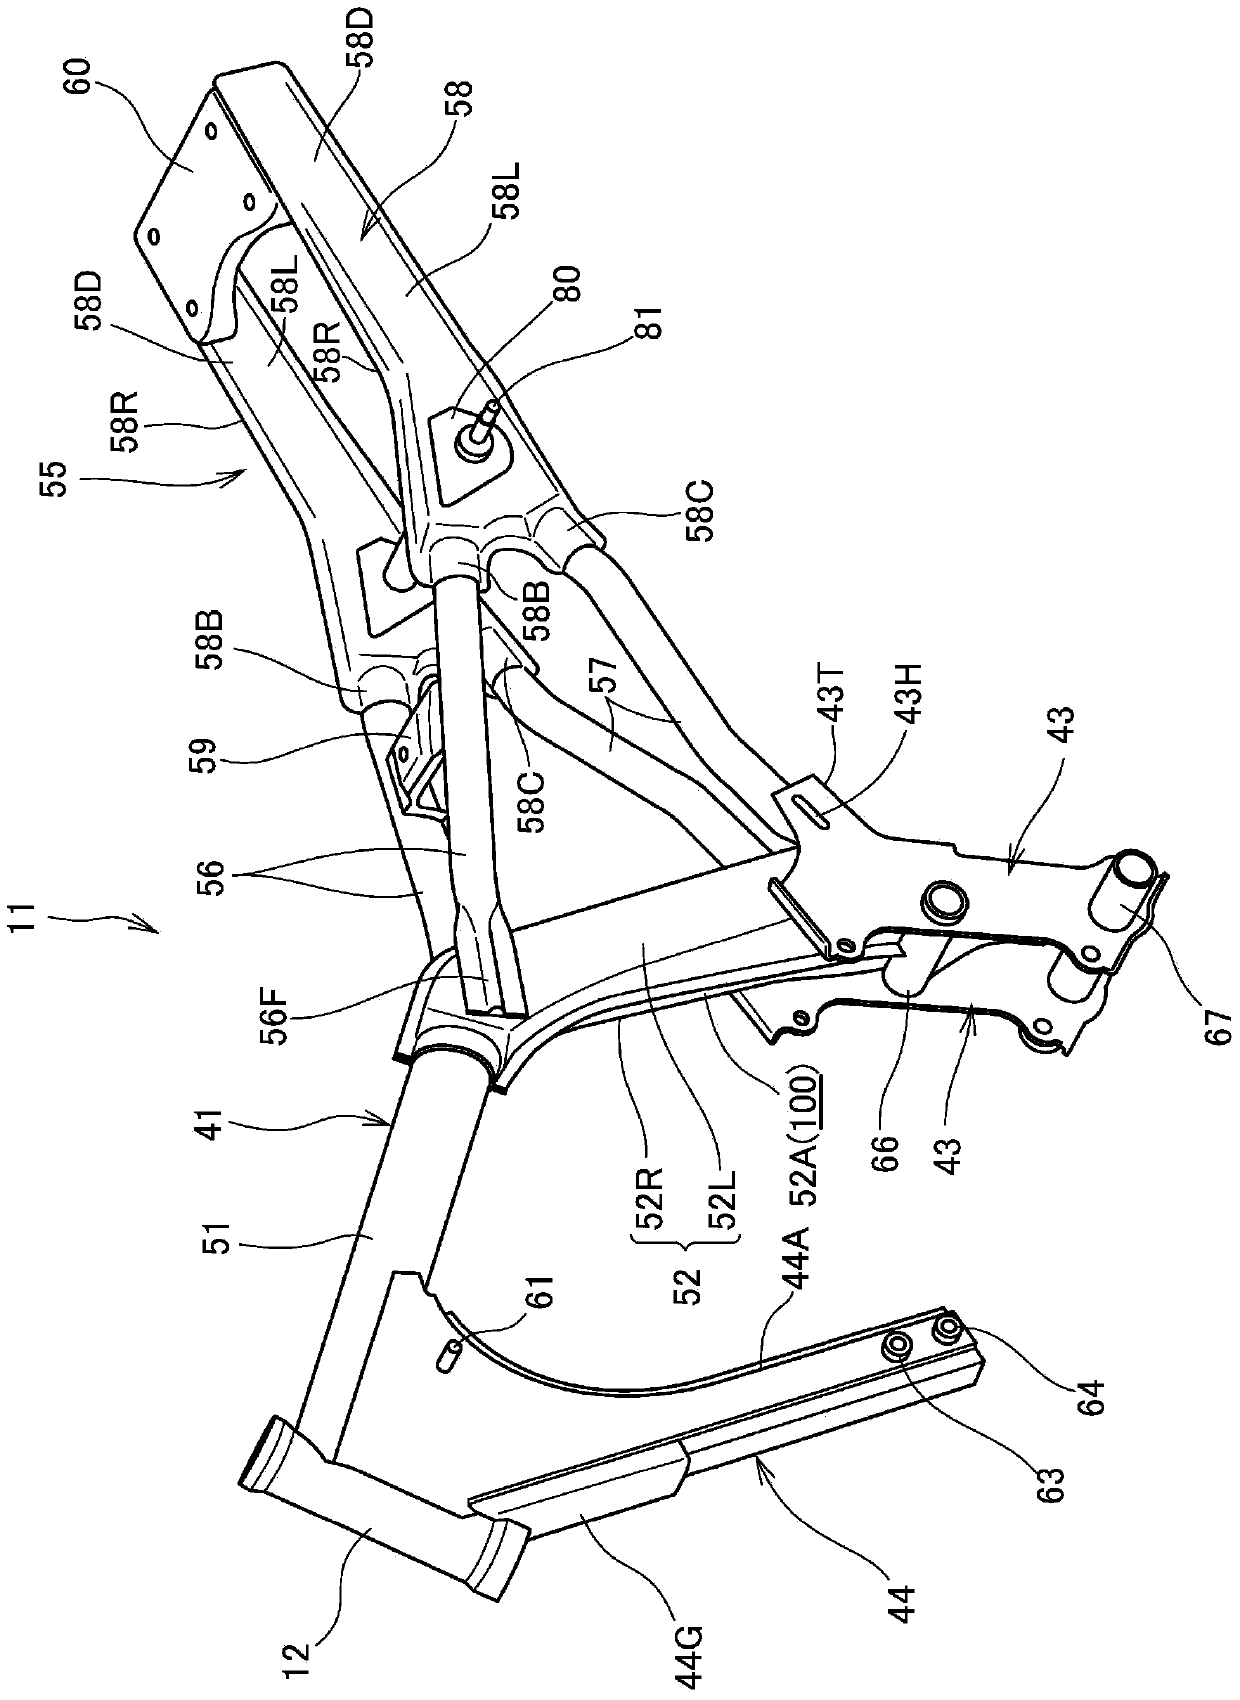 Body frame for saddle-riding vehicles